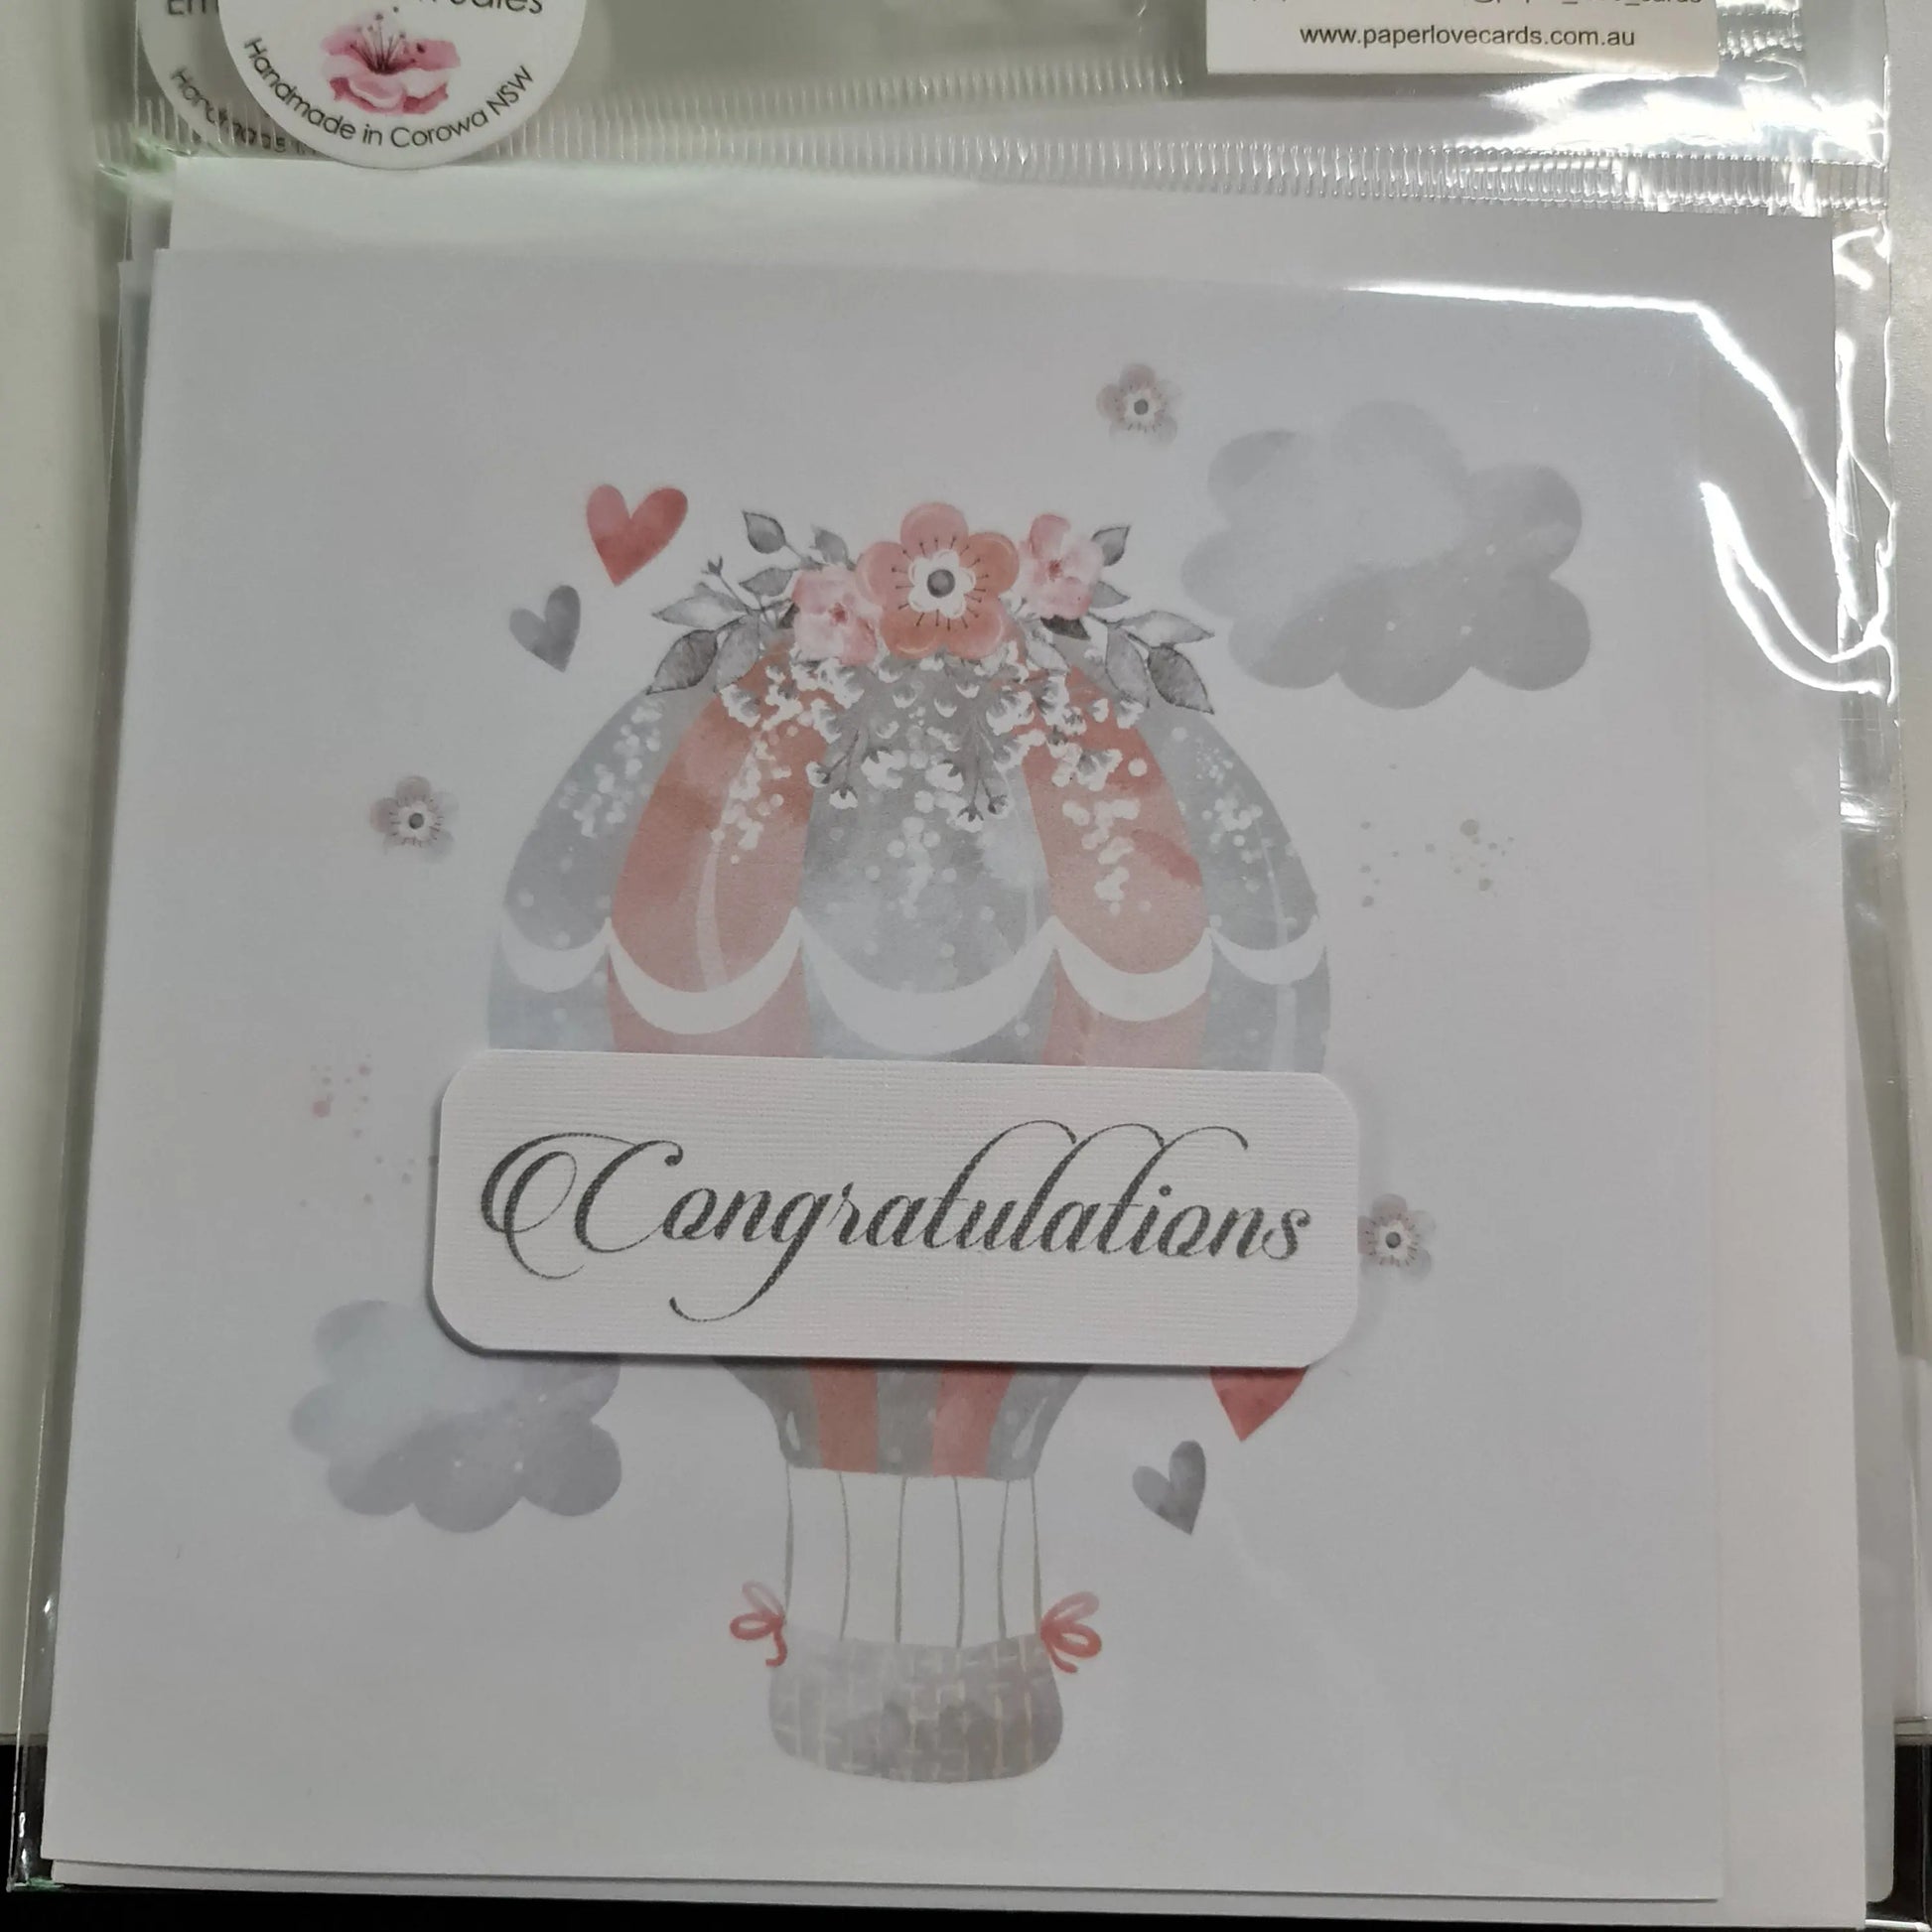 Congratulations Hot Air Balloon Card Paper Love Cards